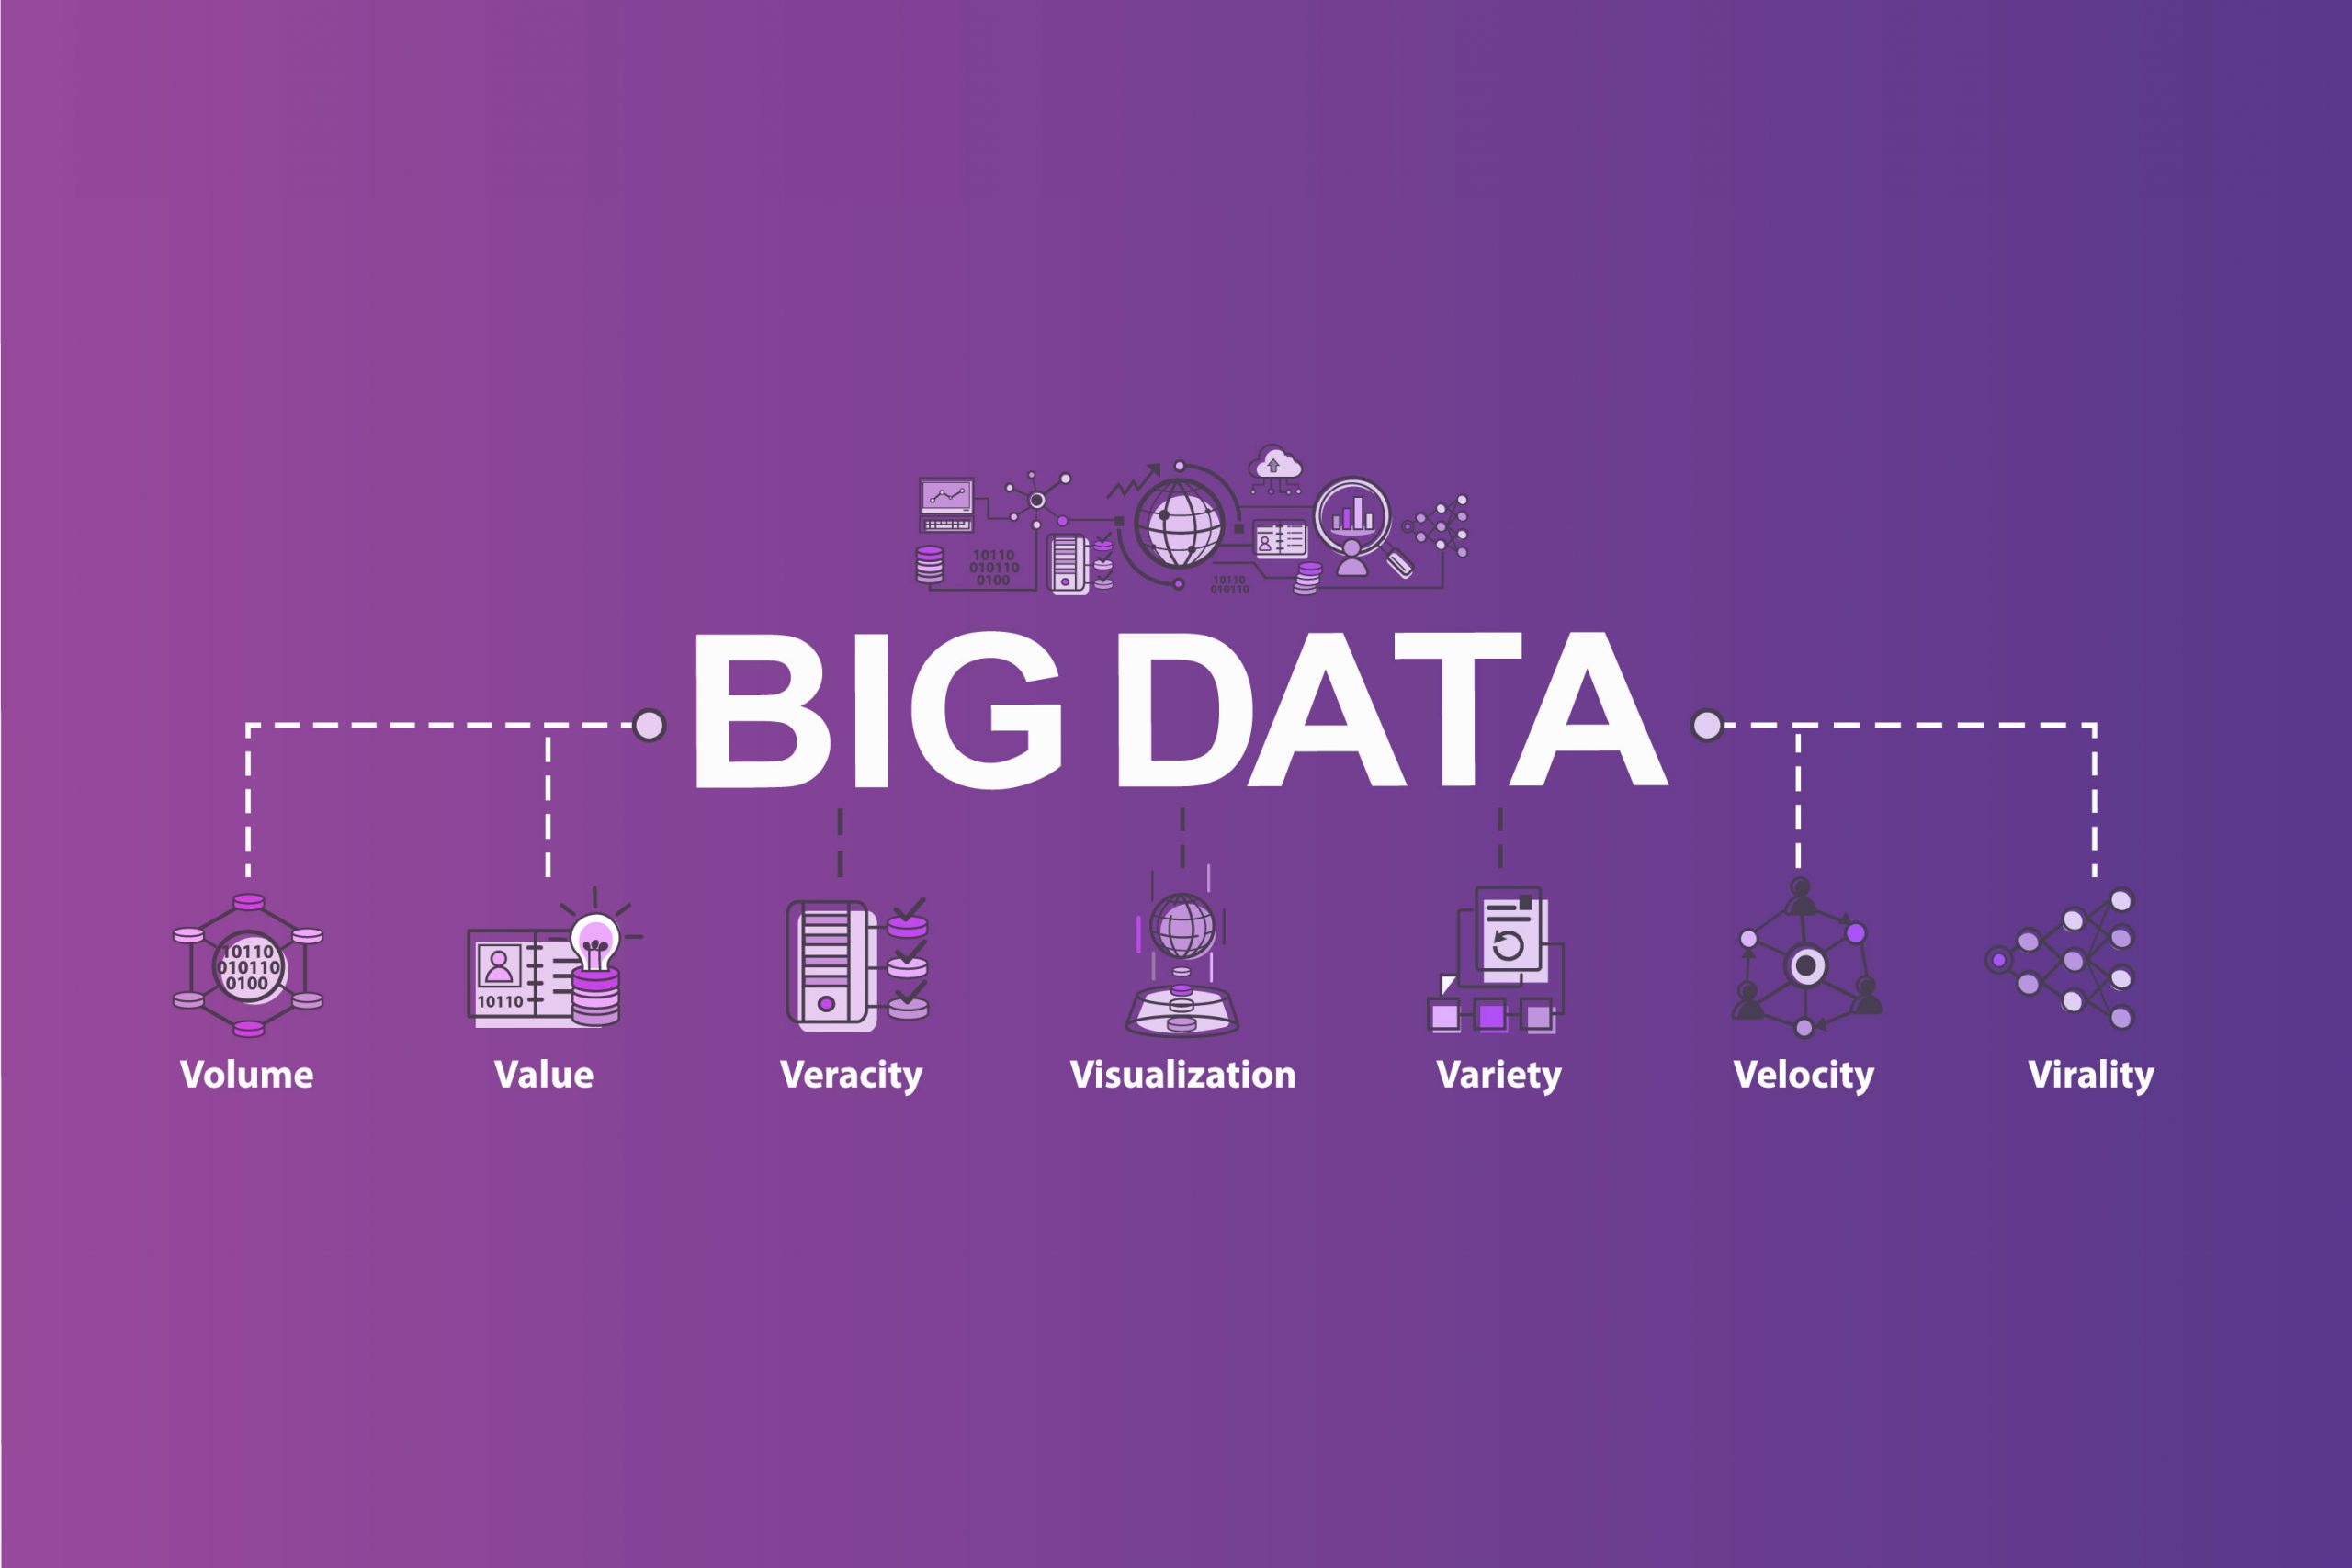 Big Data - trends